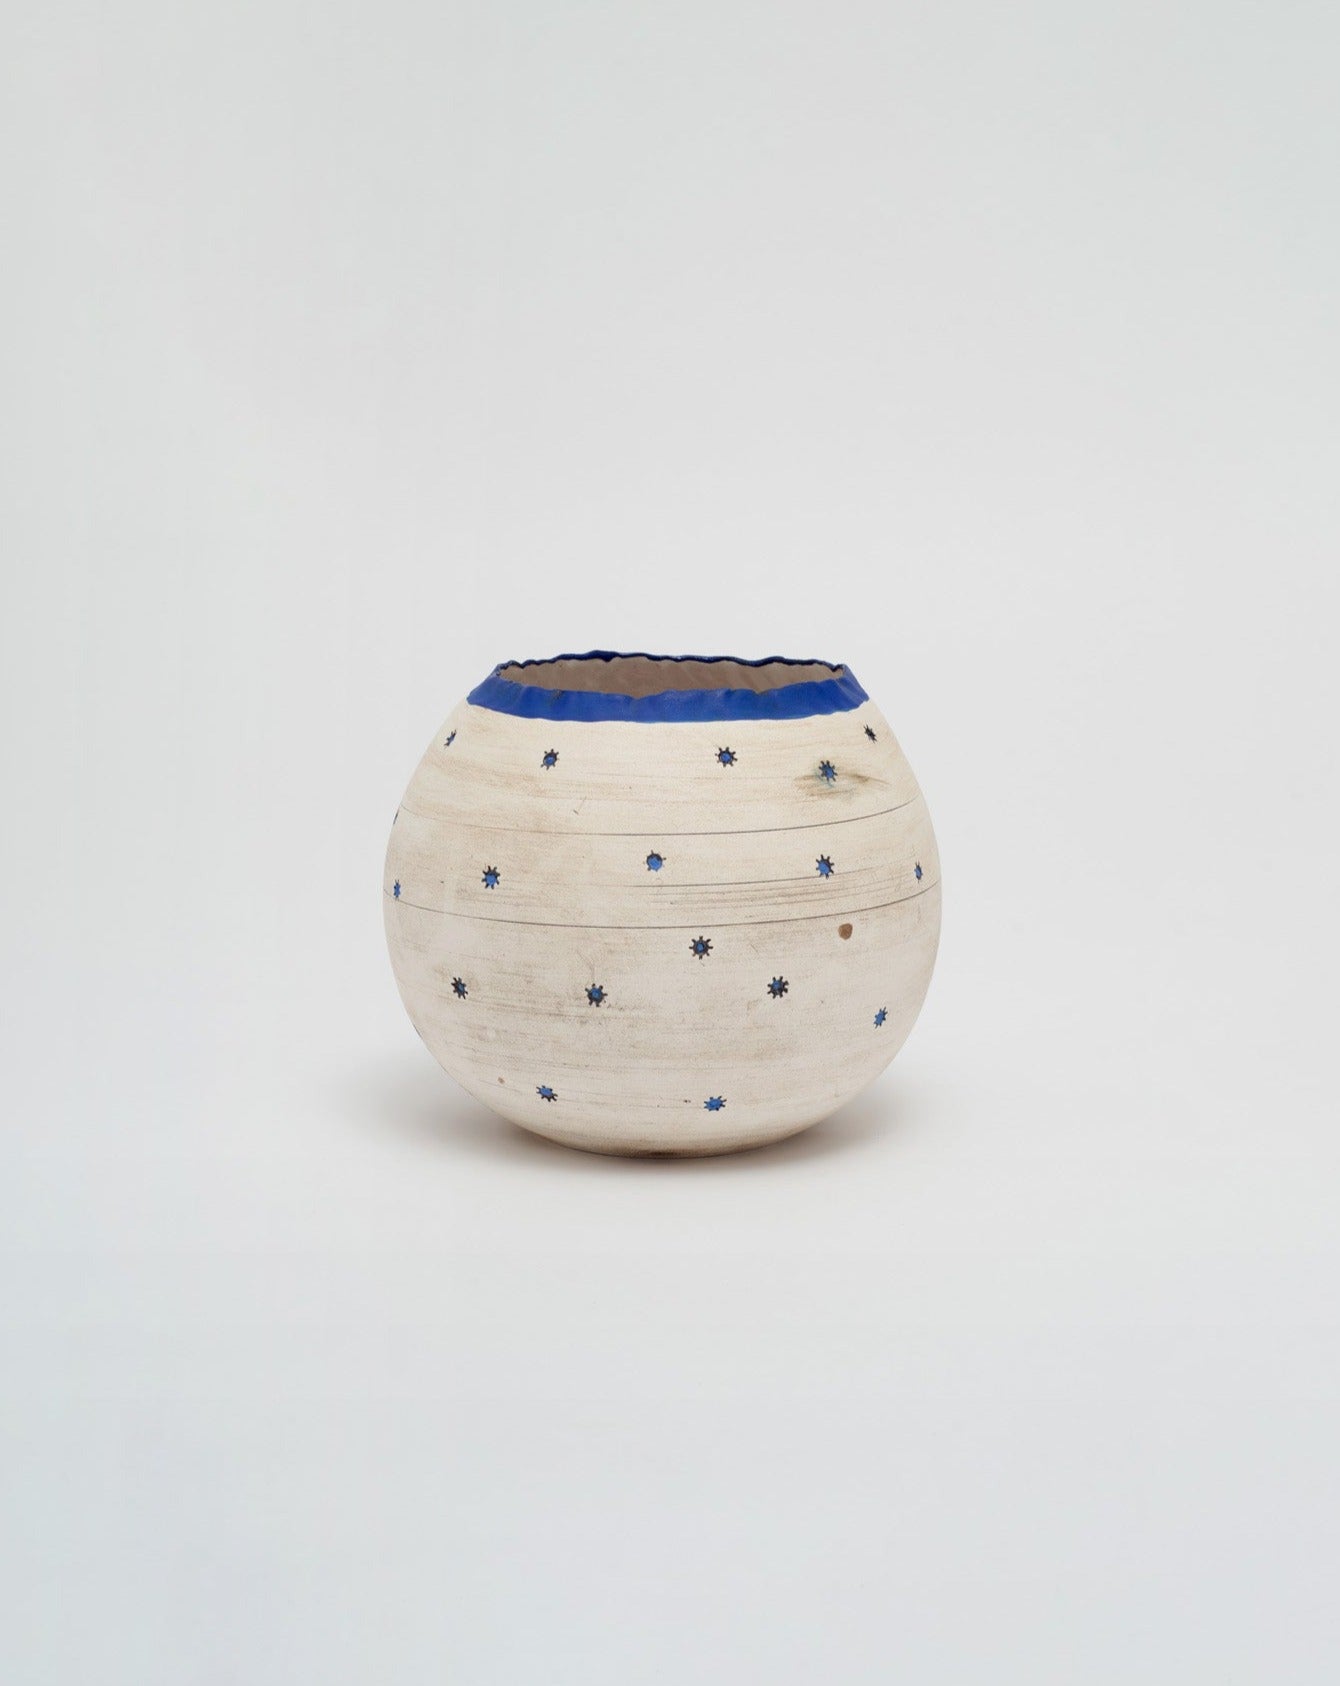 Hand built ceramic vase by Zizipho Poswa for Imiso